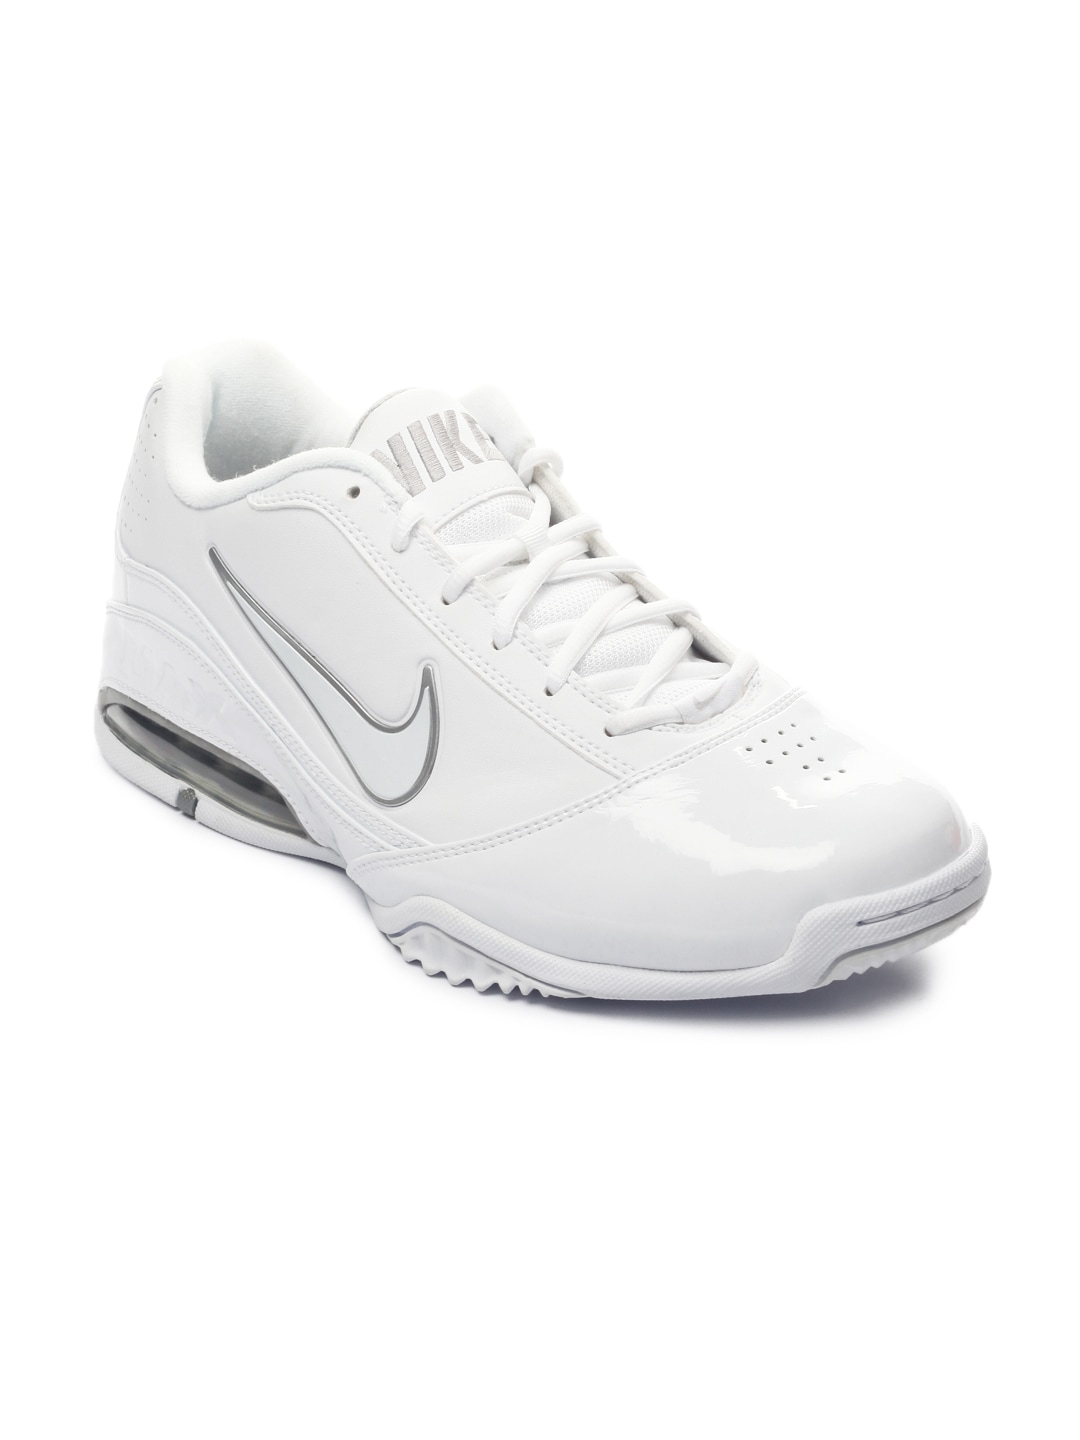 Nike Men Air Max Turnaround Low White Sports Shoes